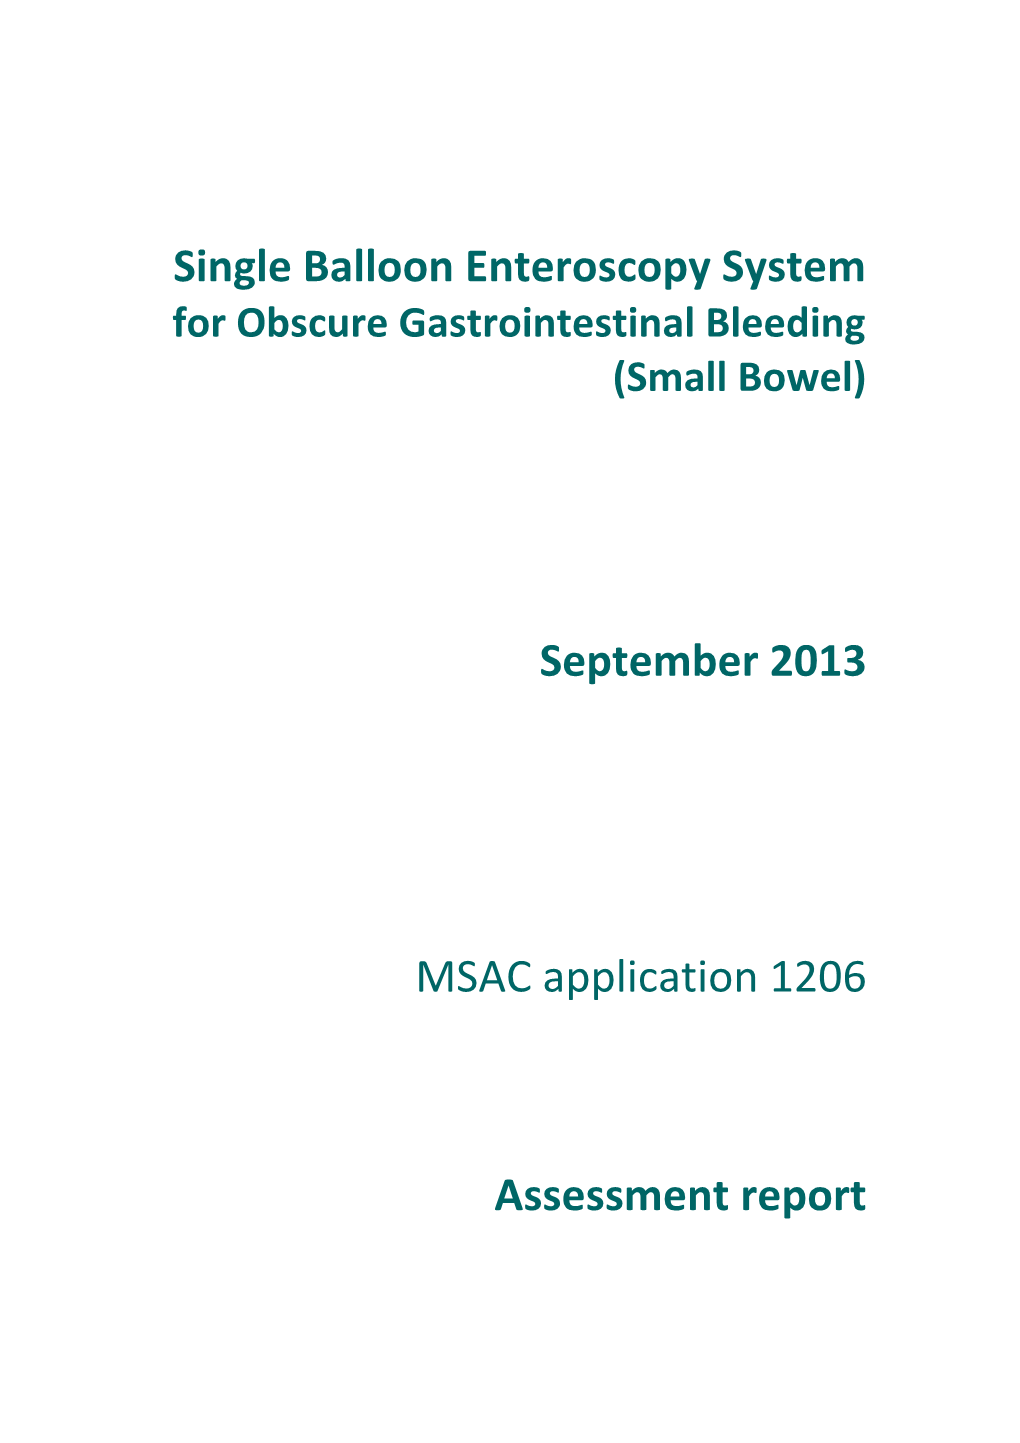 Assessment Report - Single Balloon Enteroscopy System for Obscure Gastrointestinal Bleeding